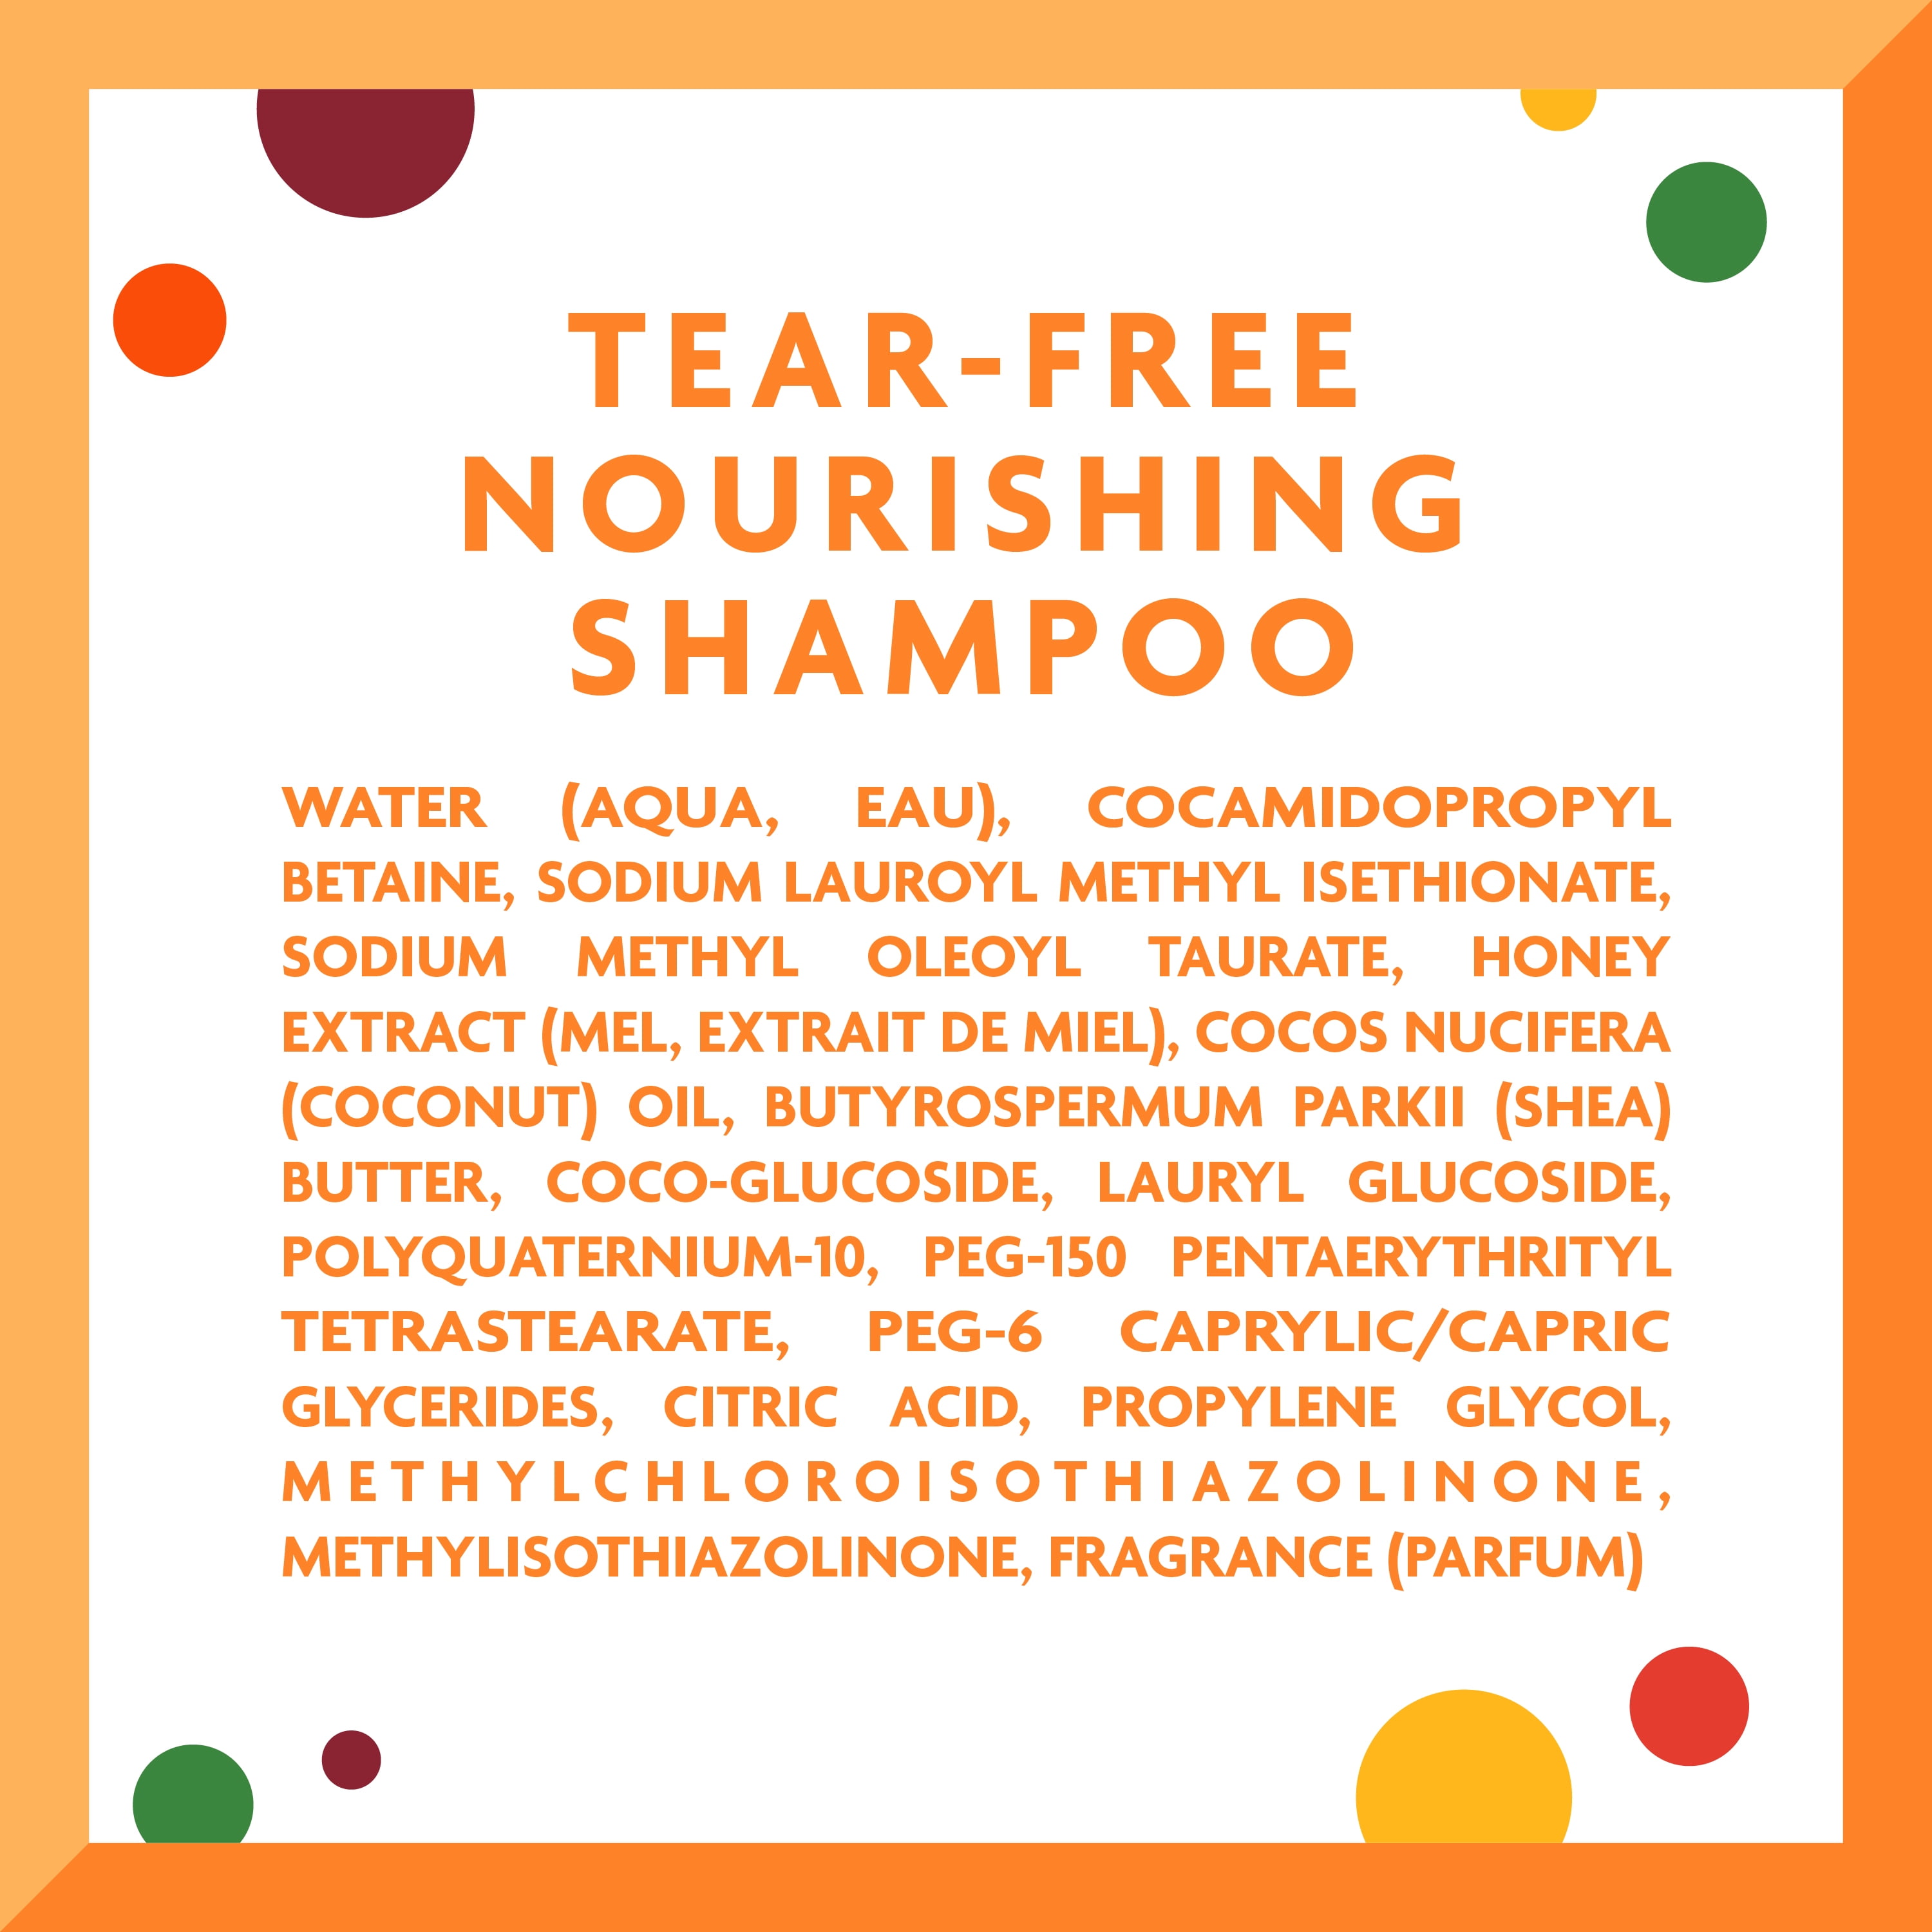 Cantu KIDS Shampoo Nourishing 237ml - CurlyNess